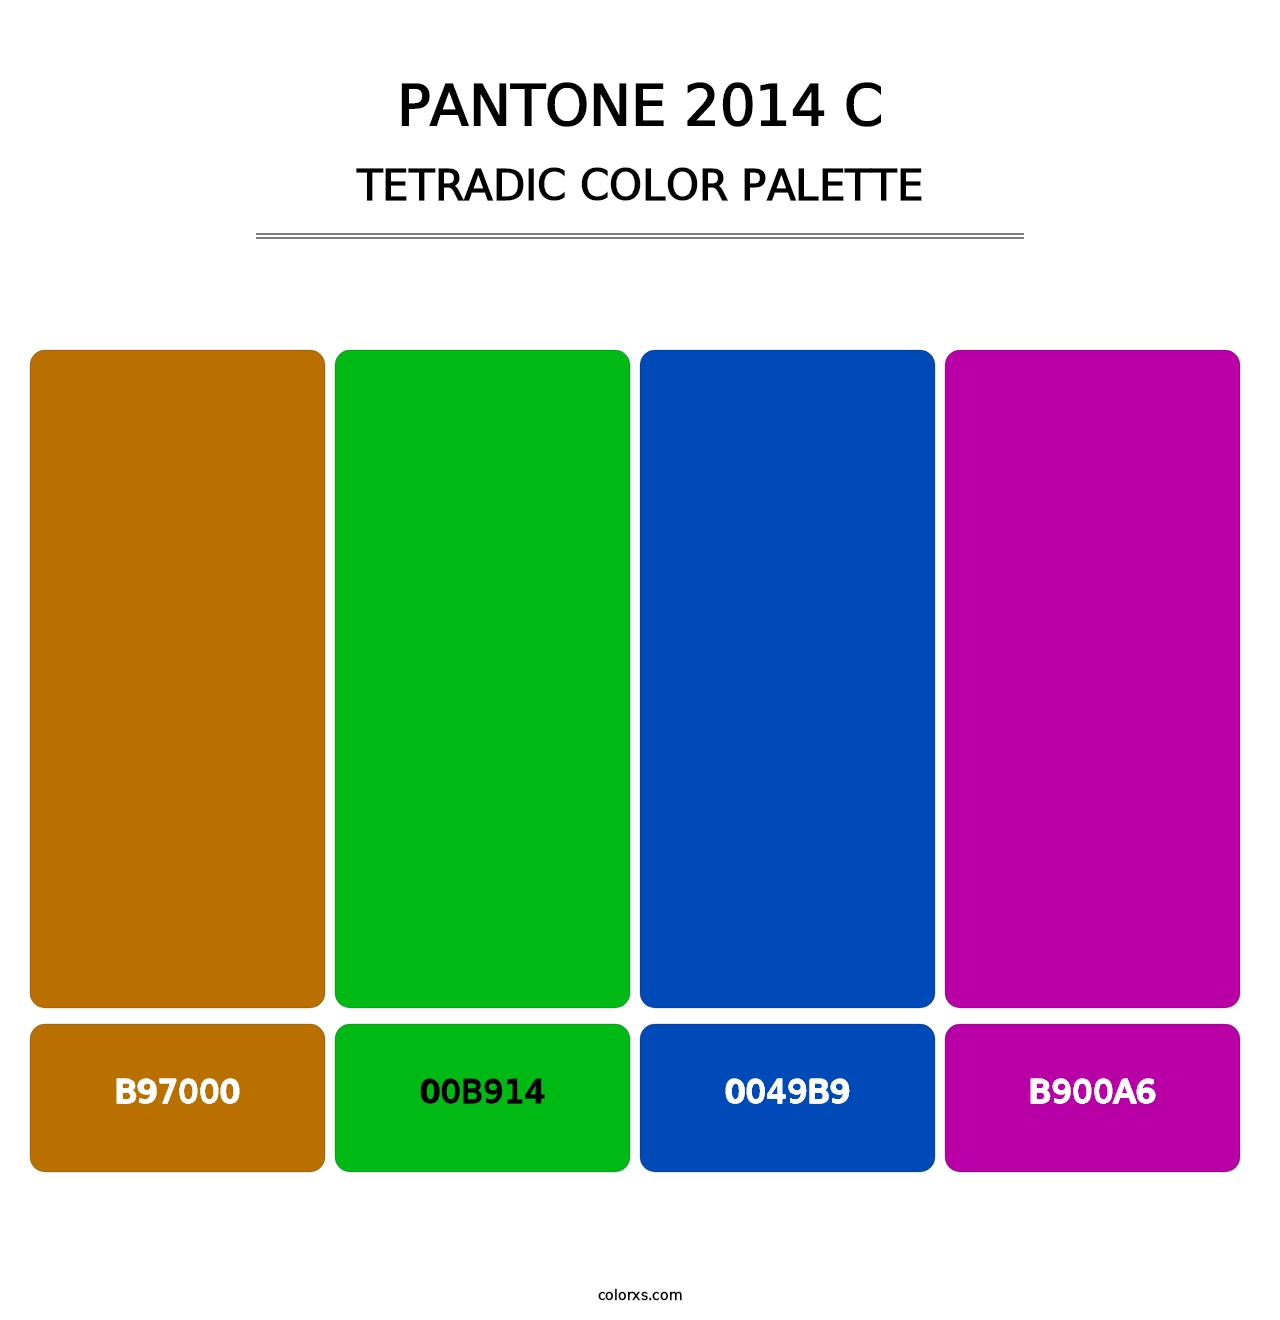 PANTONE 2014 C - Tetradic Color Palette